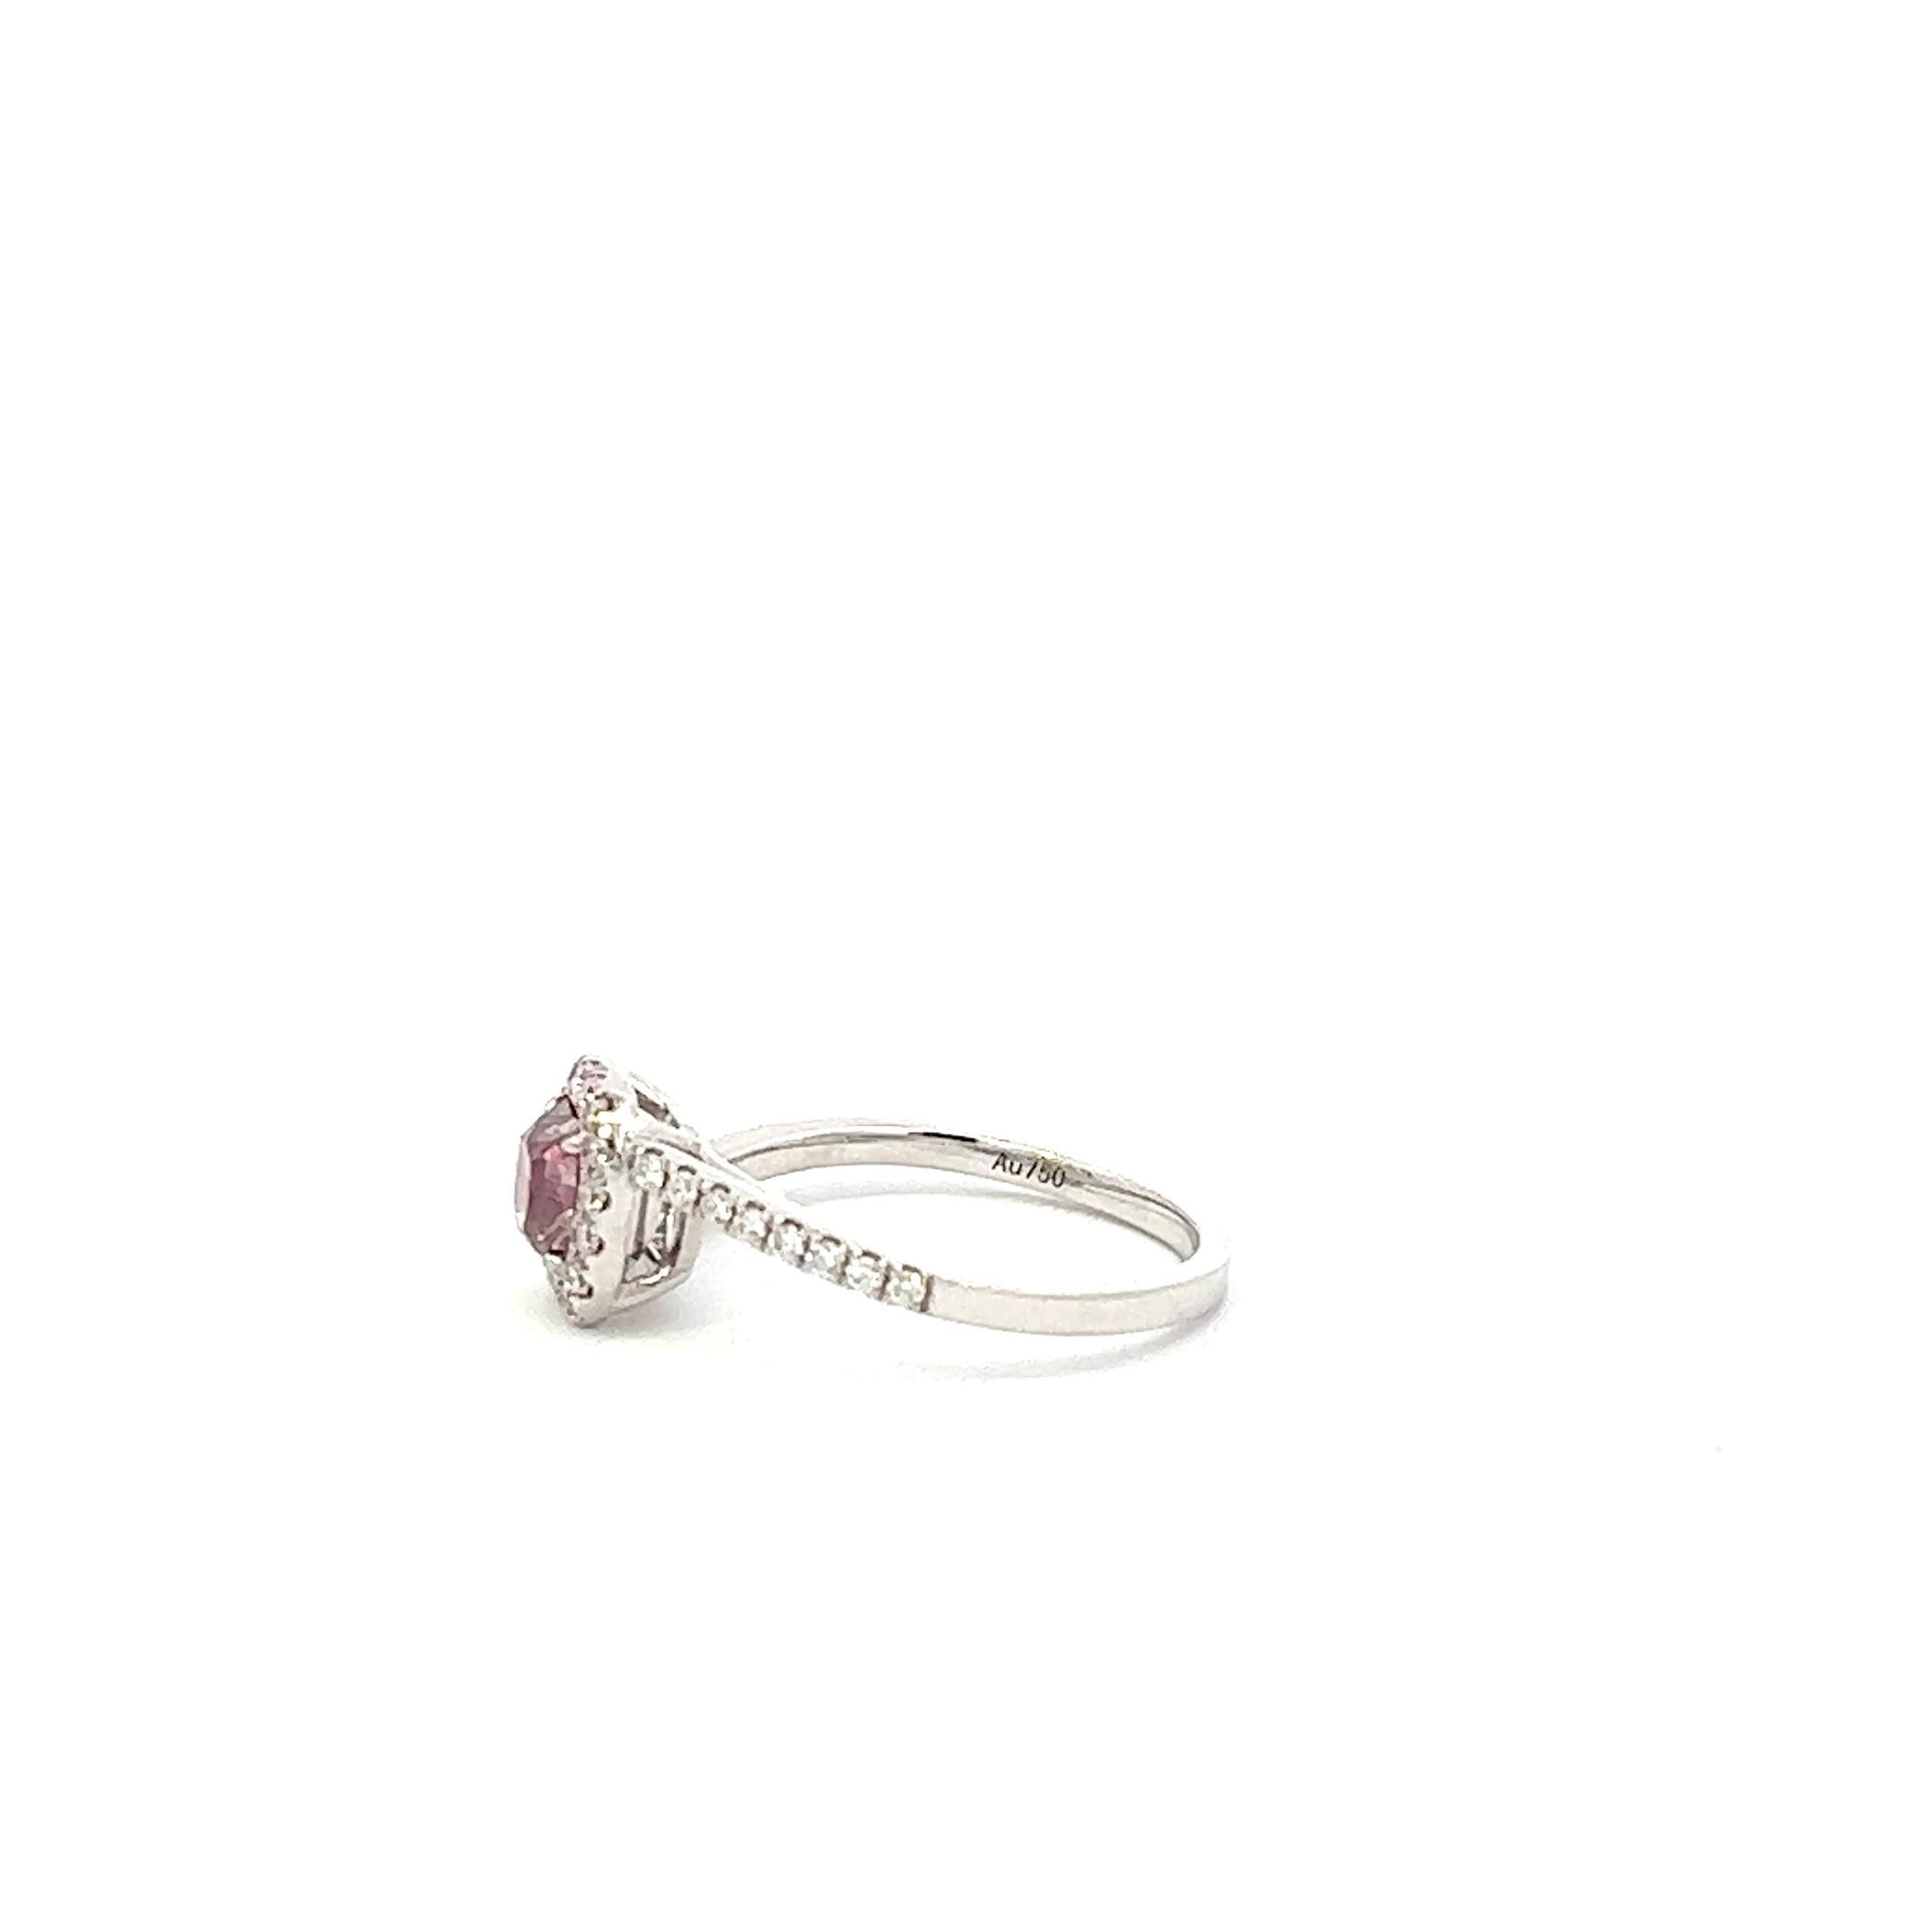 Cushion Cut GIA Certified 1.00 Carat Pink Diamond Ring For Sale